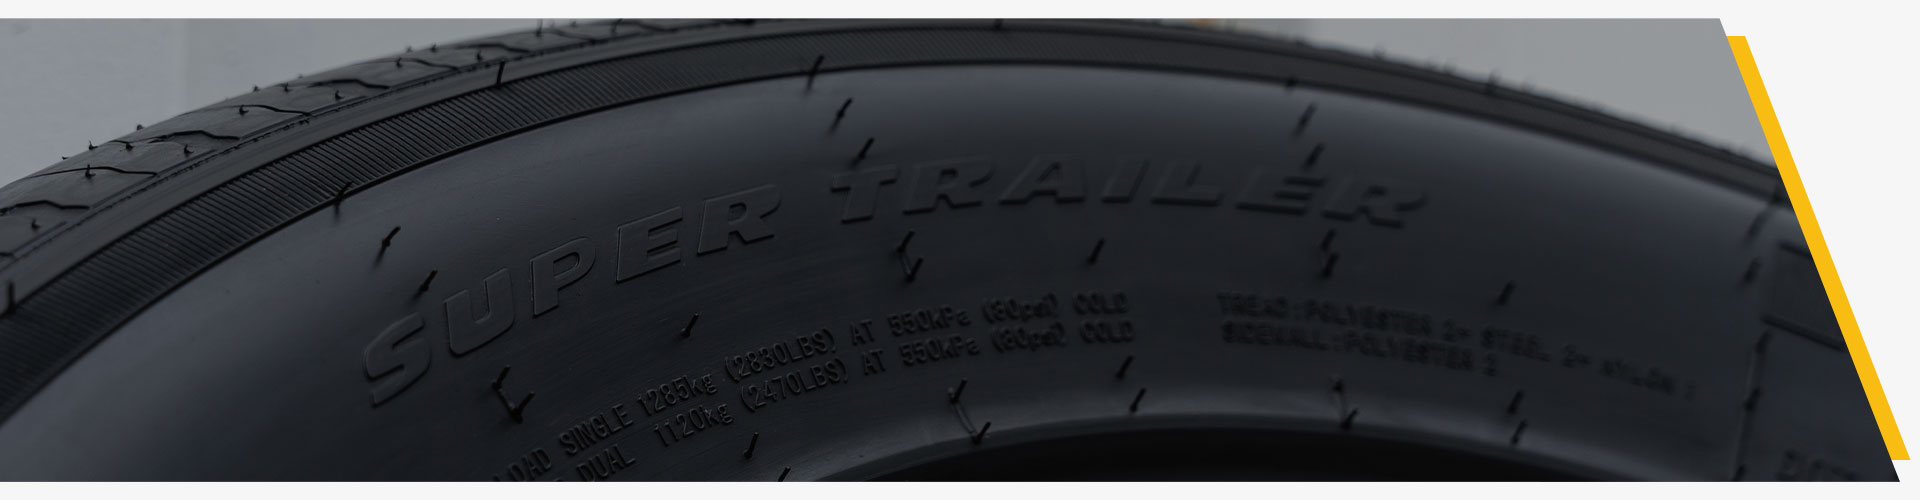 Trailer Tires Image 3